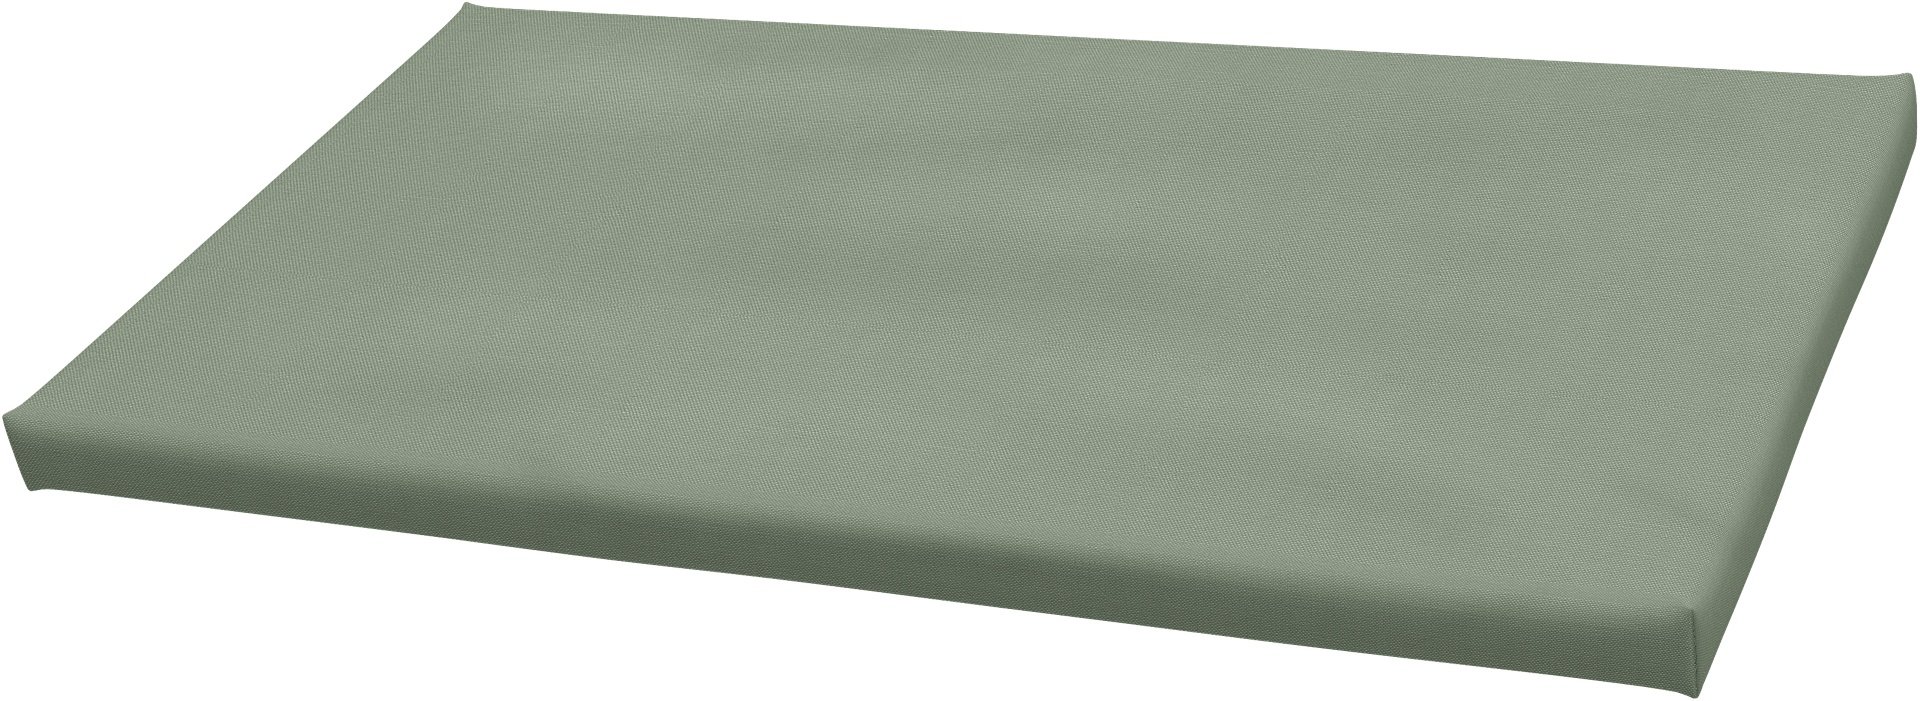 IKEA - Bankkamrat Cushion Cover 90x50x3,5 cm , Seagrass, Cotton - Bemz